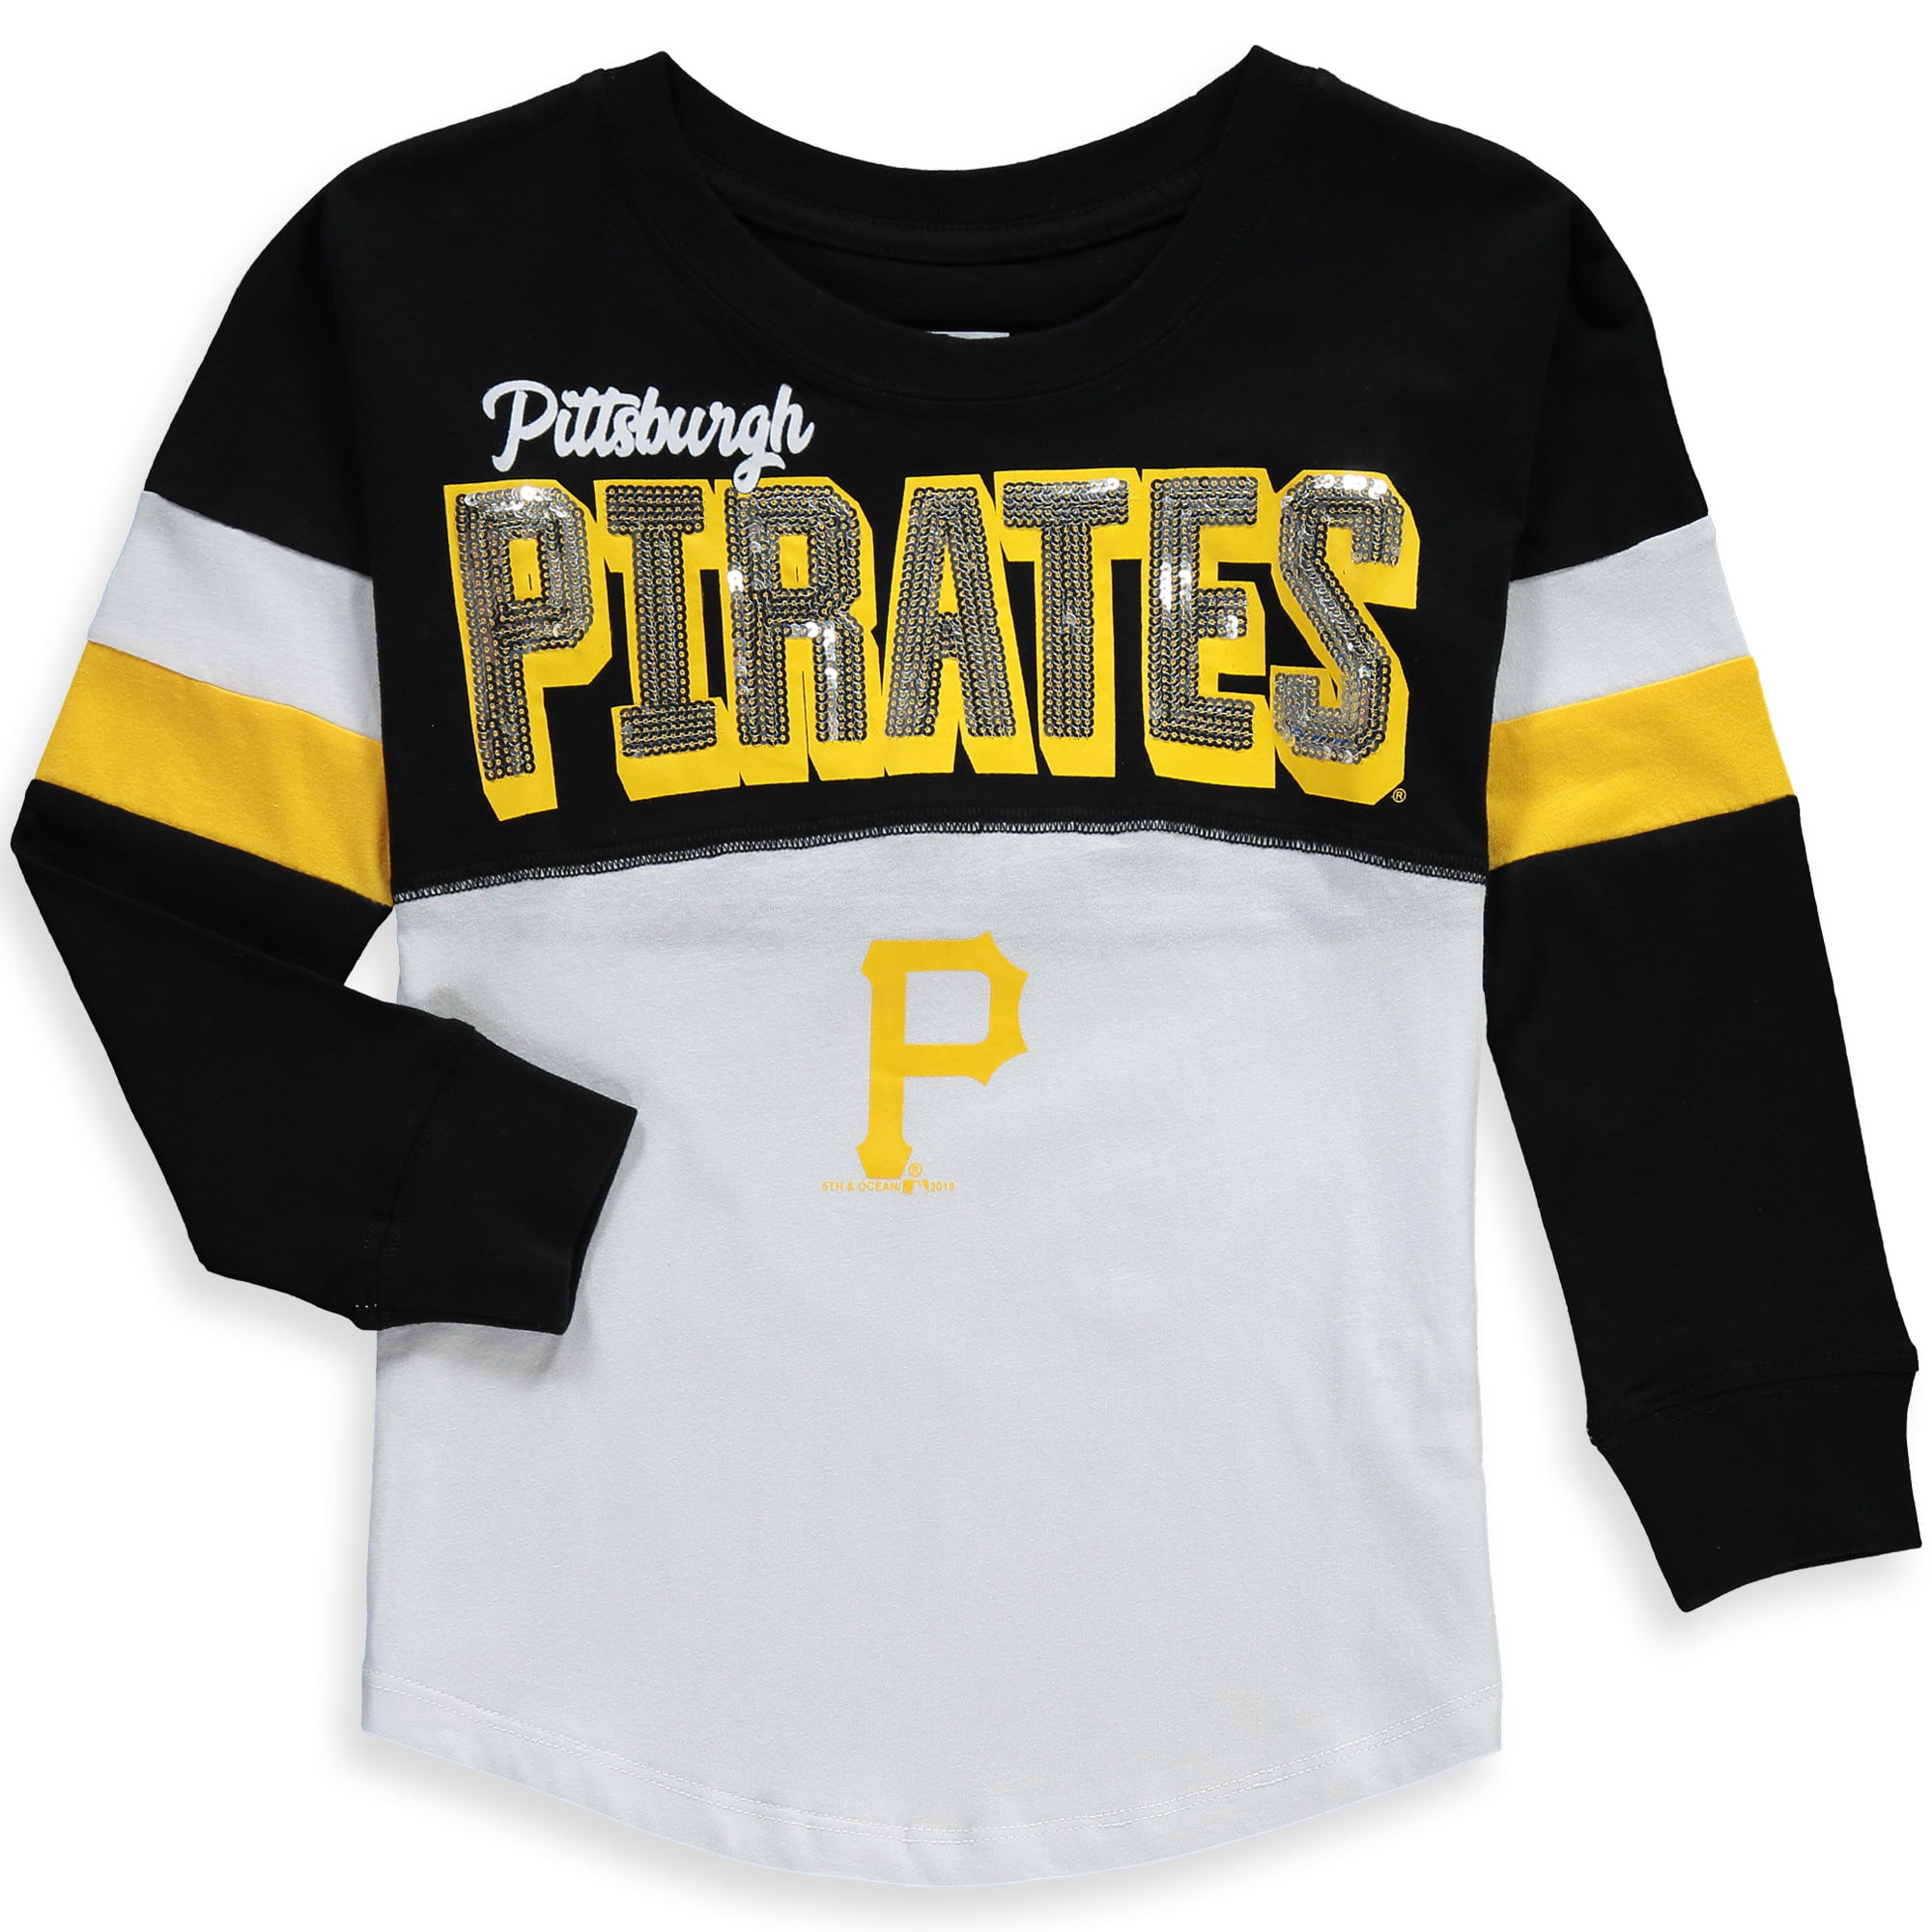 new pirates jersey